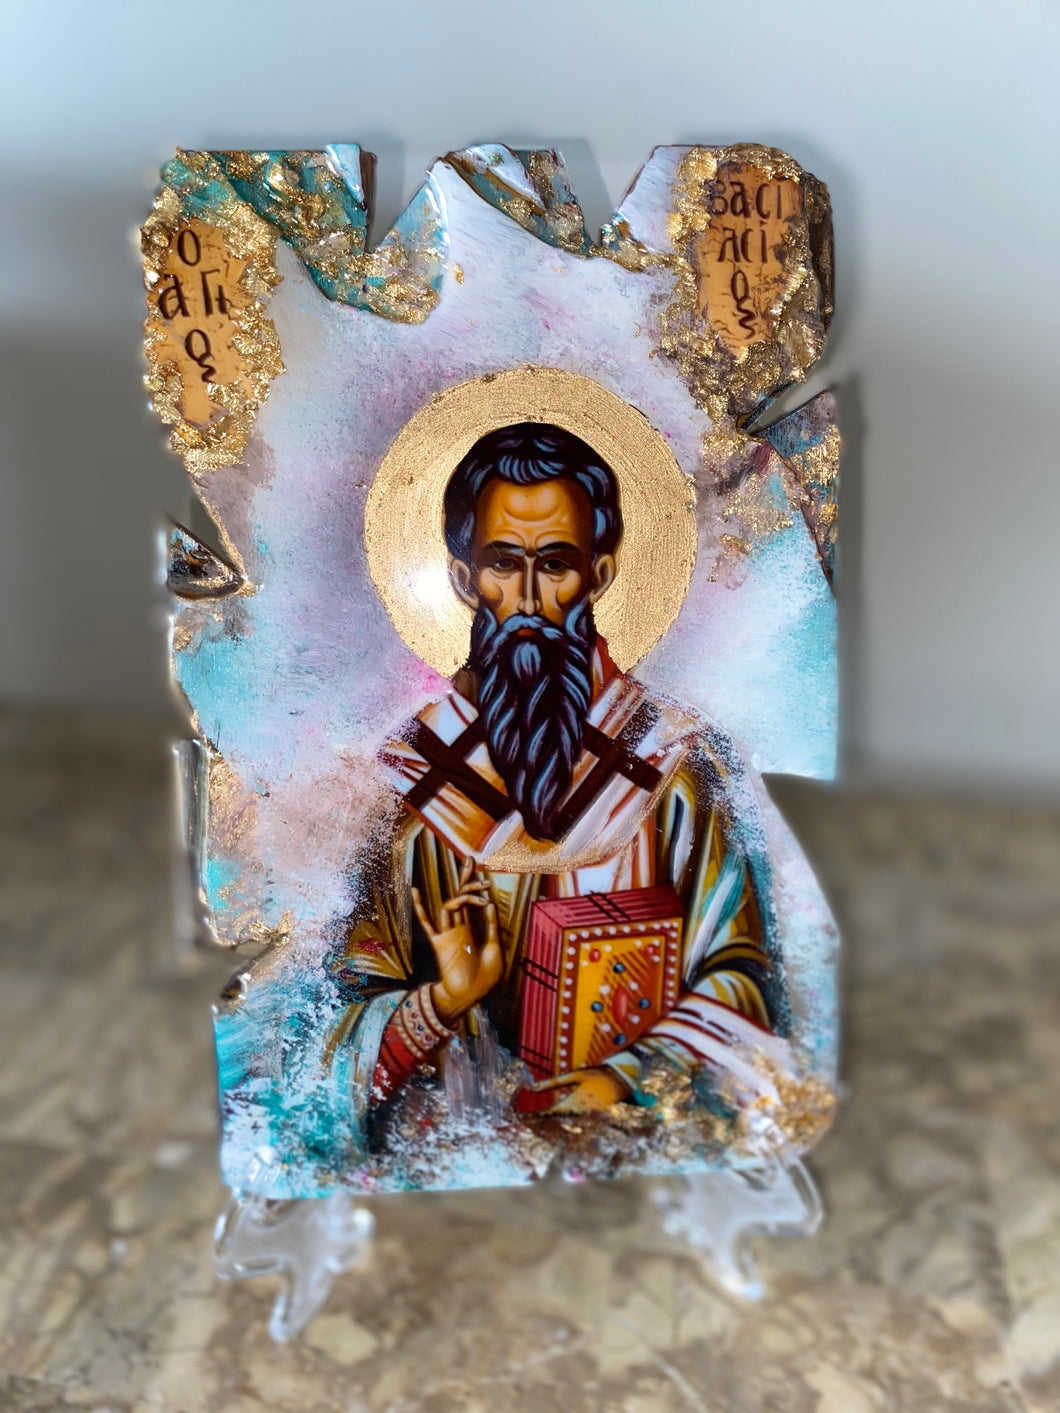 Saint Basil / Vasilios - religious wood epoxy resin handmade icon art - Only 1 off - Original